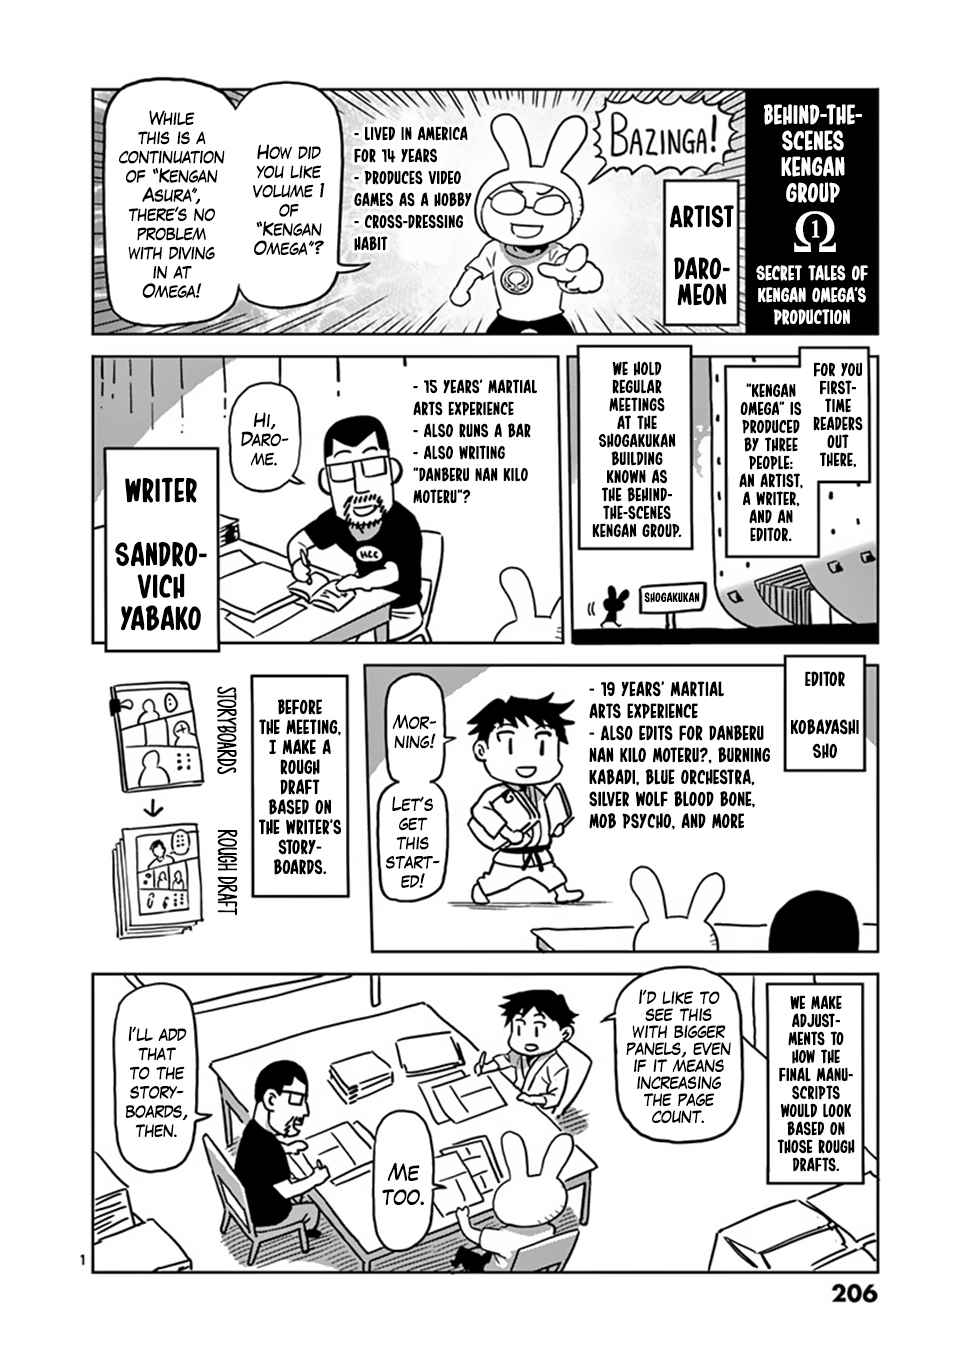 Kengan Omega Vol. 1 Ch. 7.5 Akiyama Kaede and Yamashita Trading Co.